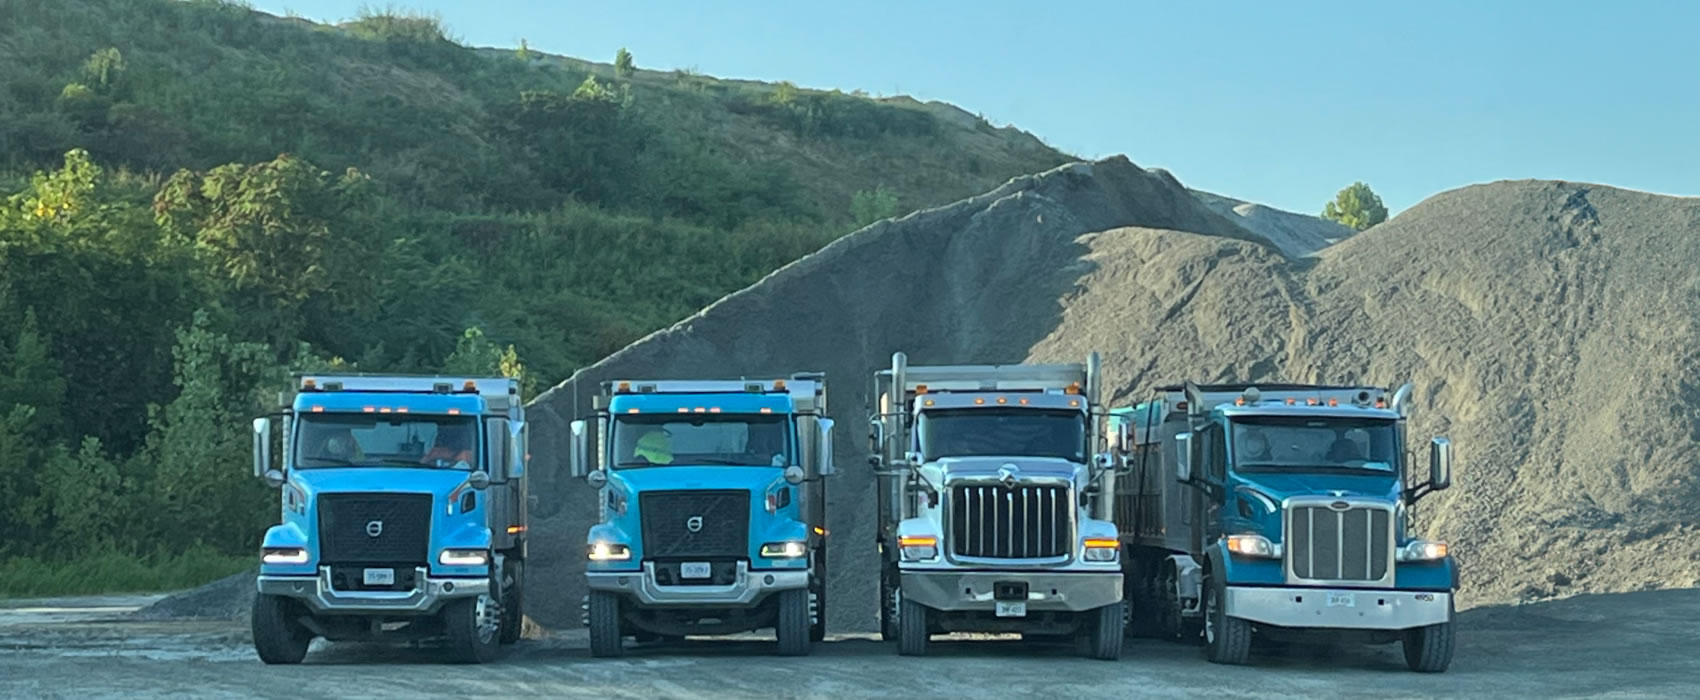 Four Dump Trucks